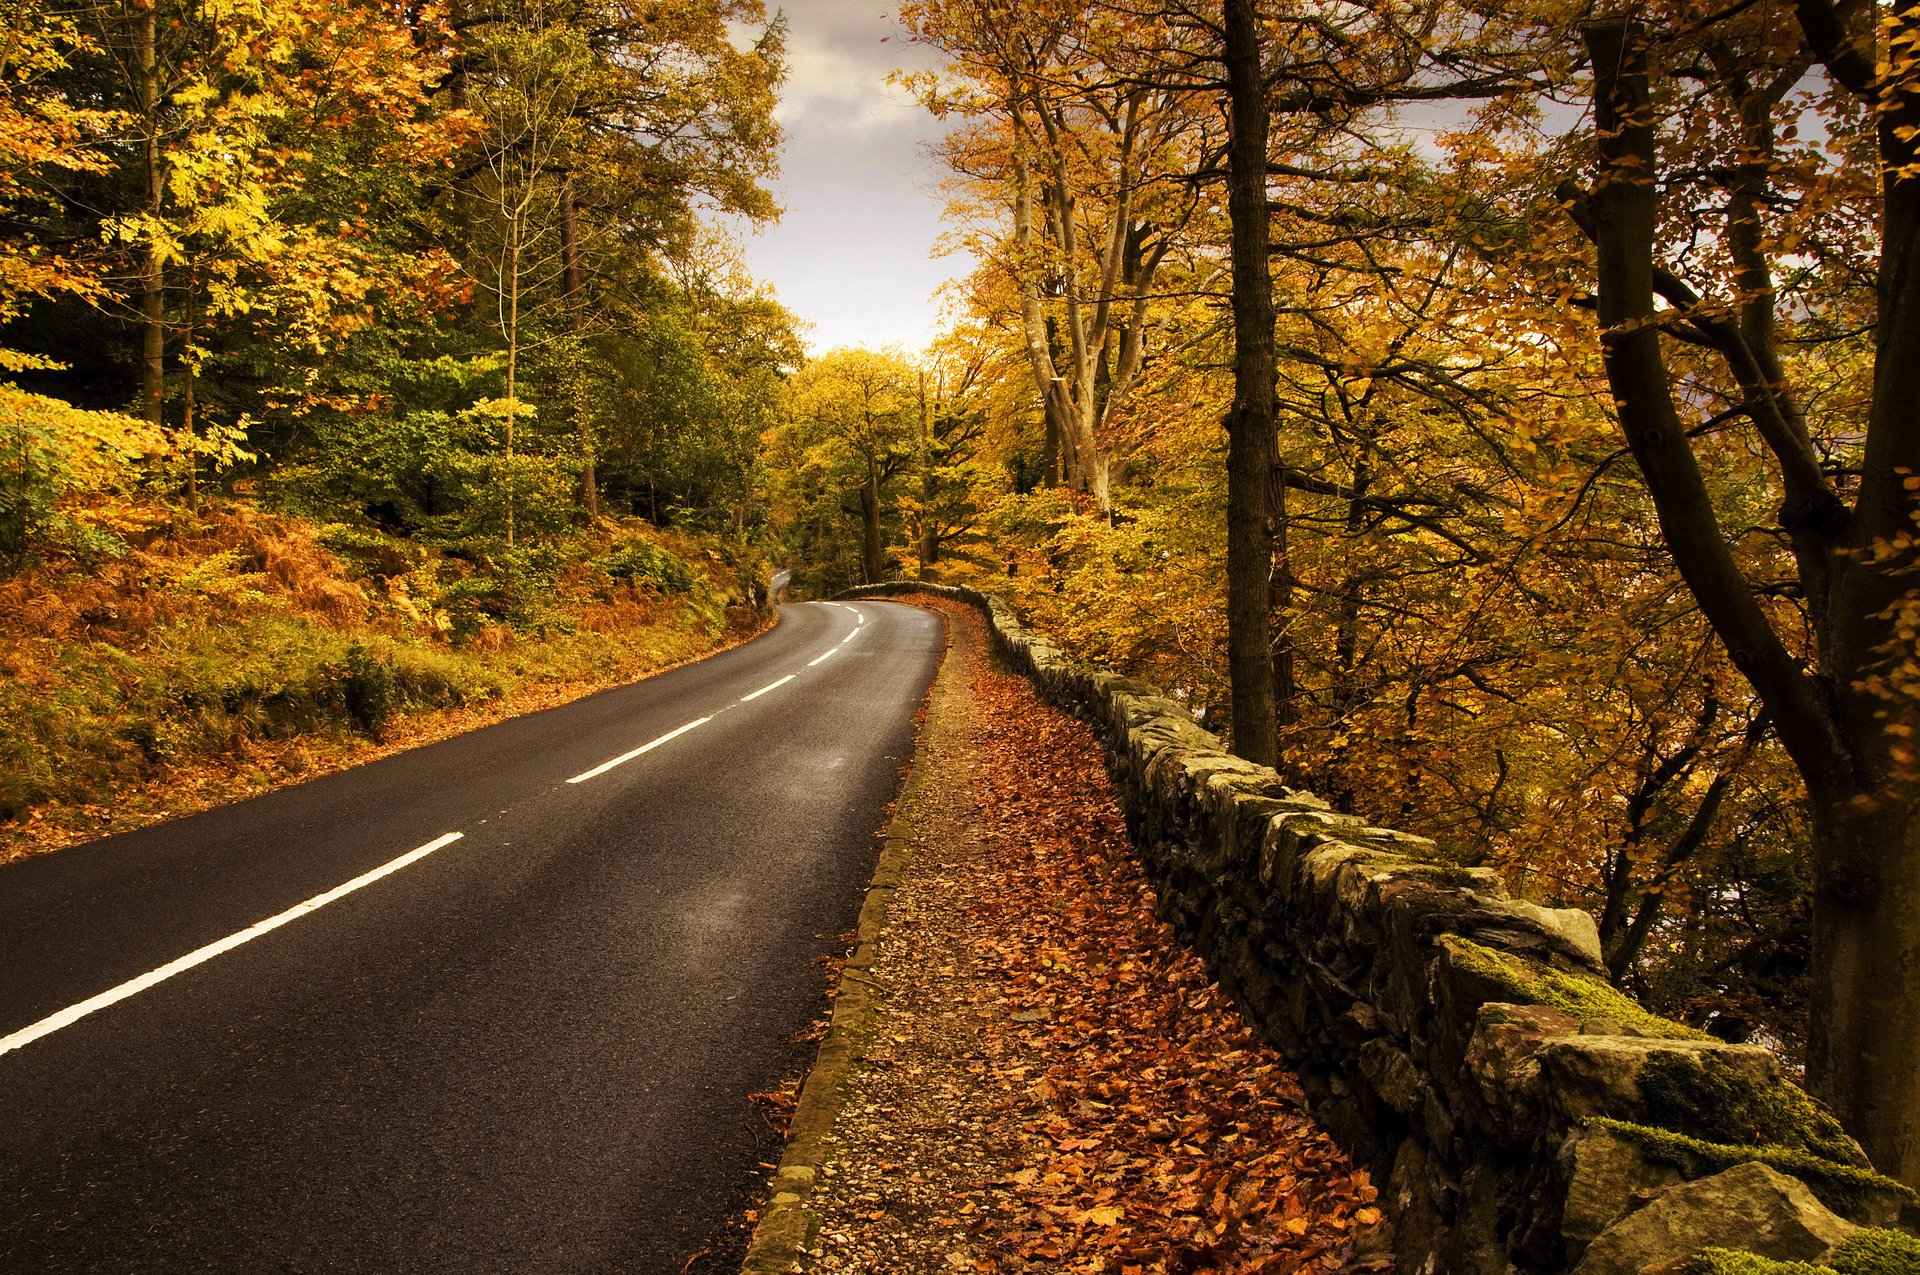 An asphalt road leads through the autumn forest